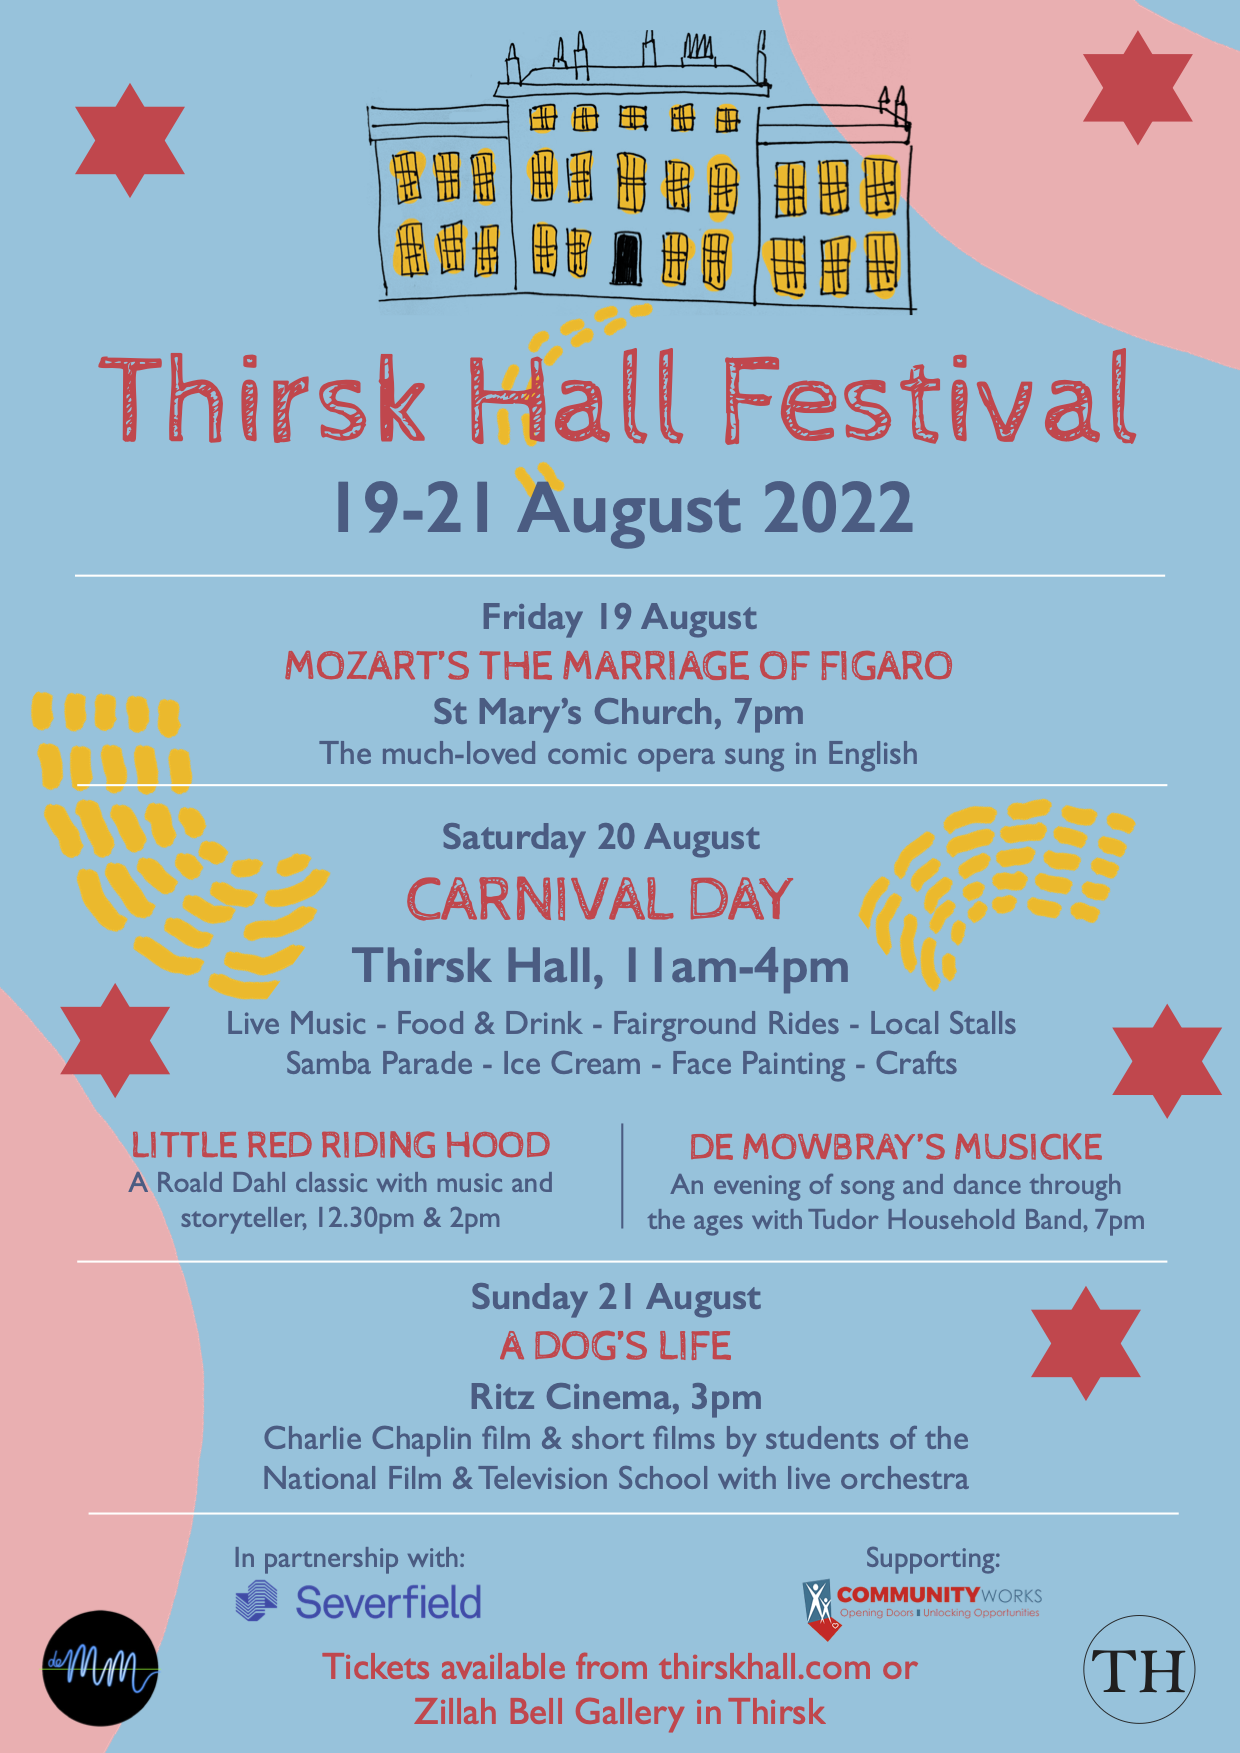 Thirsk Hall Festival